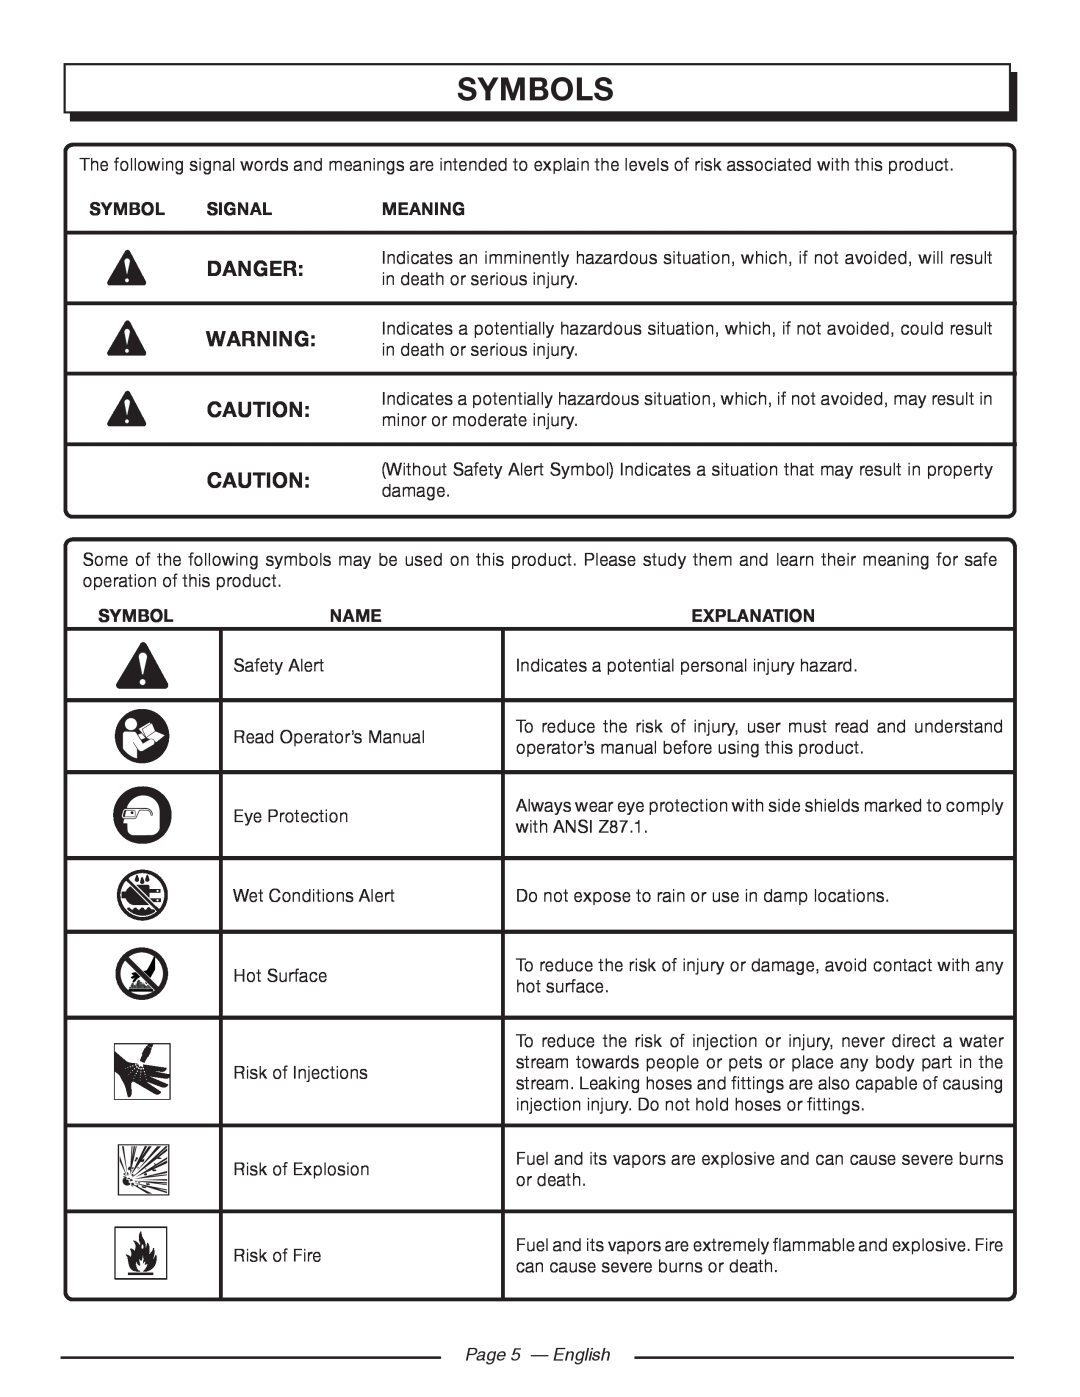 Homelite UT80993 manuel dutilisation Symbols, Danger, Signal, Meaning, Name, Explanation, Page 5 - English 